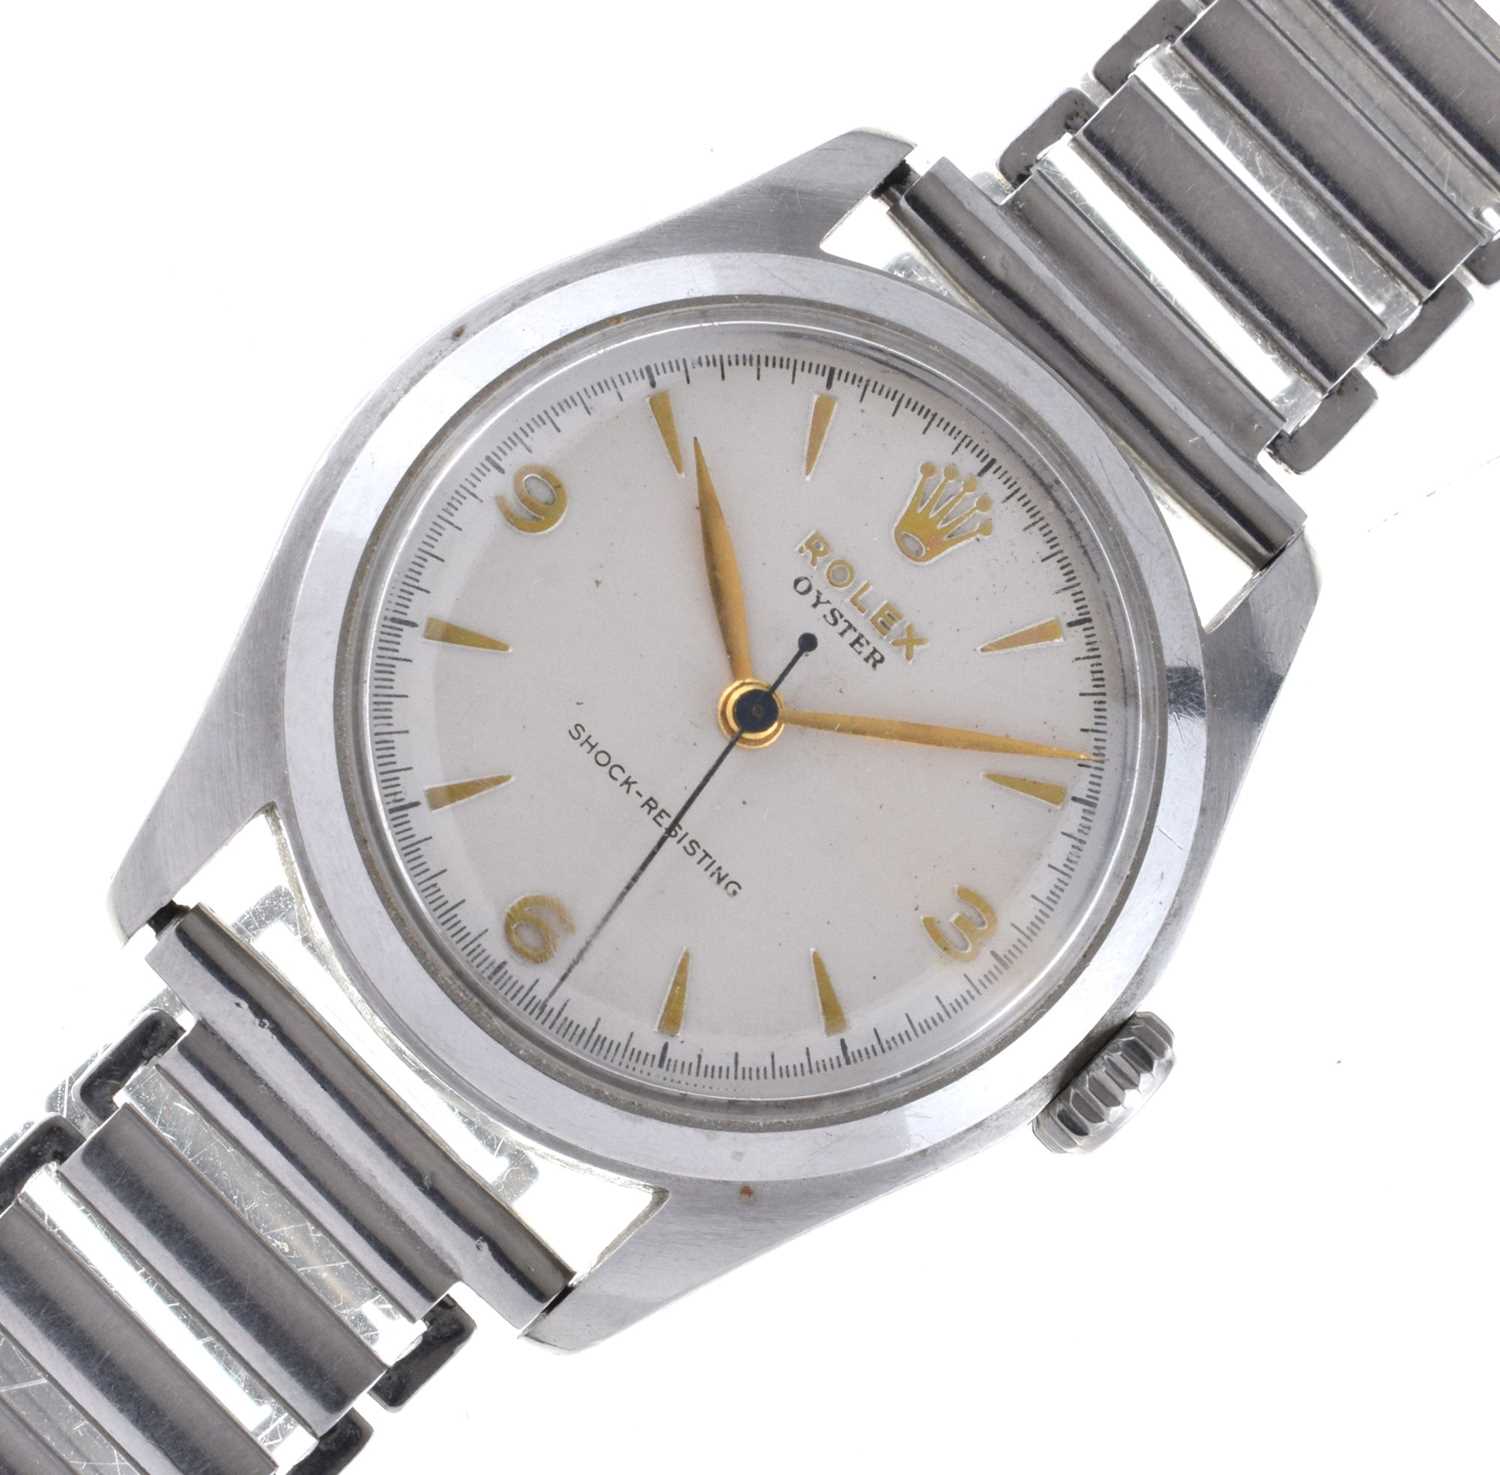 Rolex - Gentleman's Oyster stainless steel wristwatch - Image 11 of 11